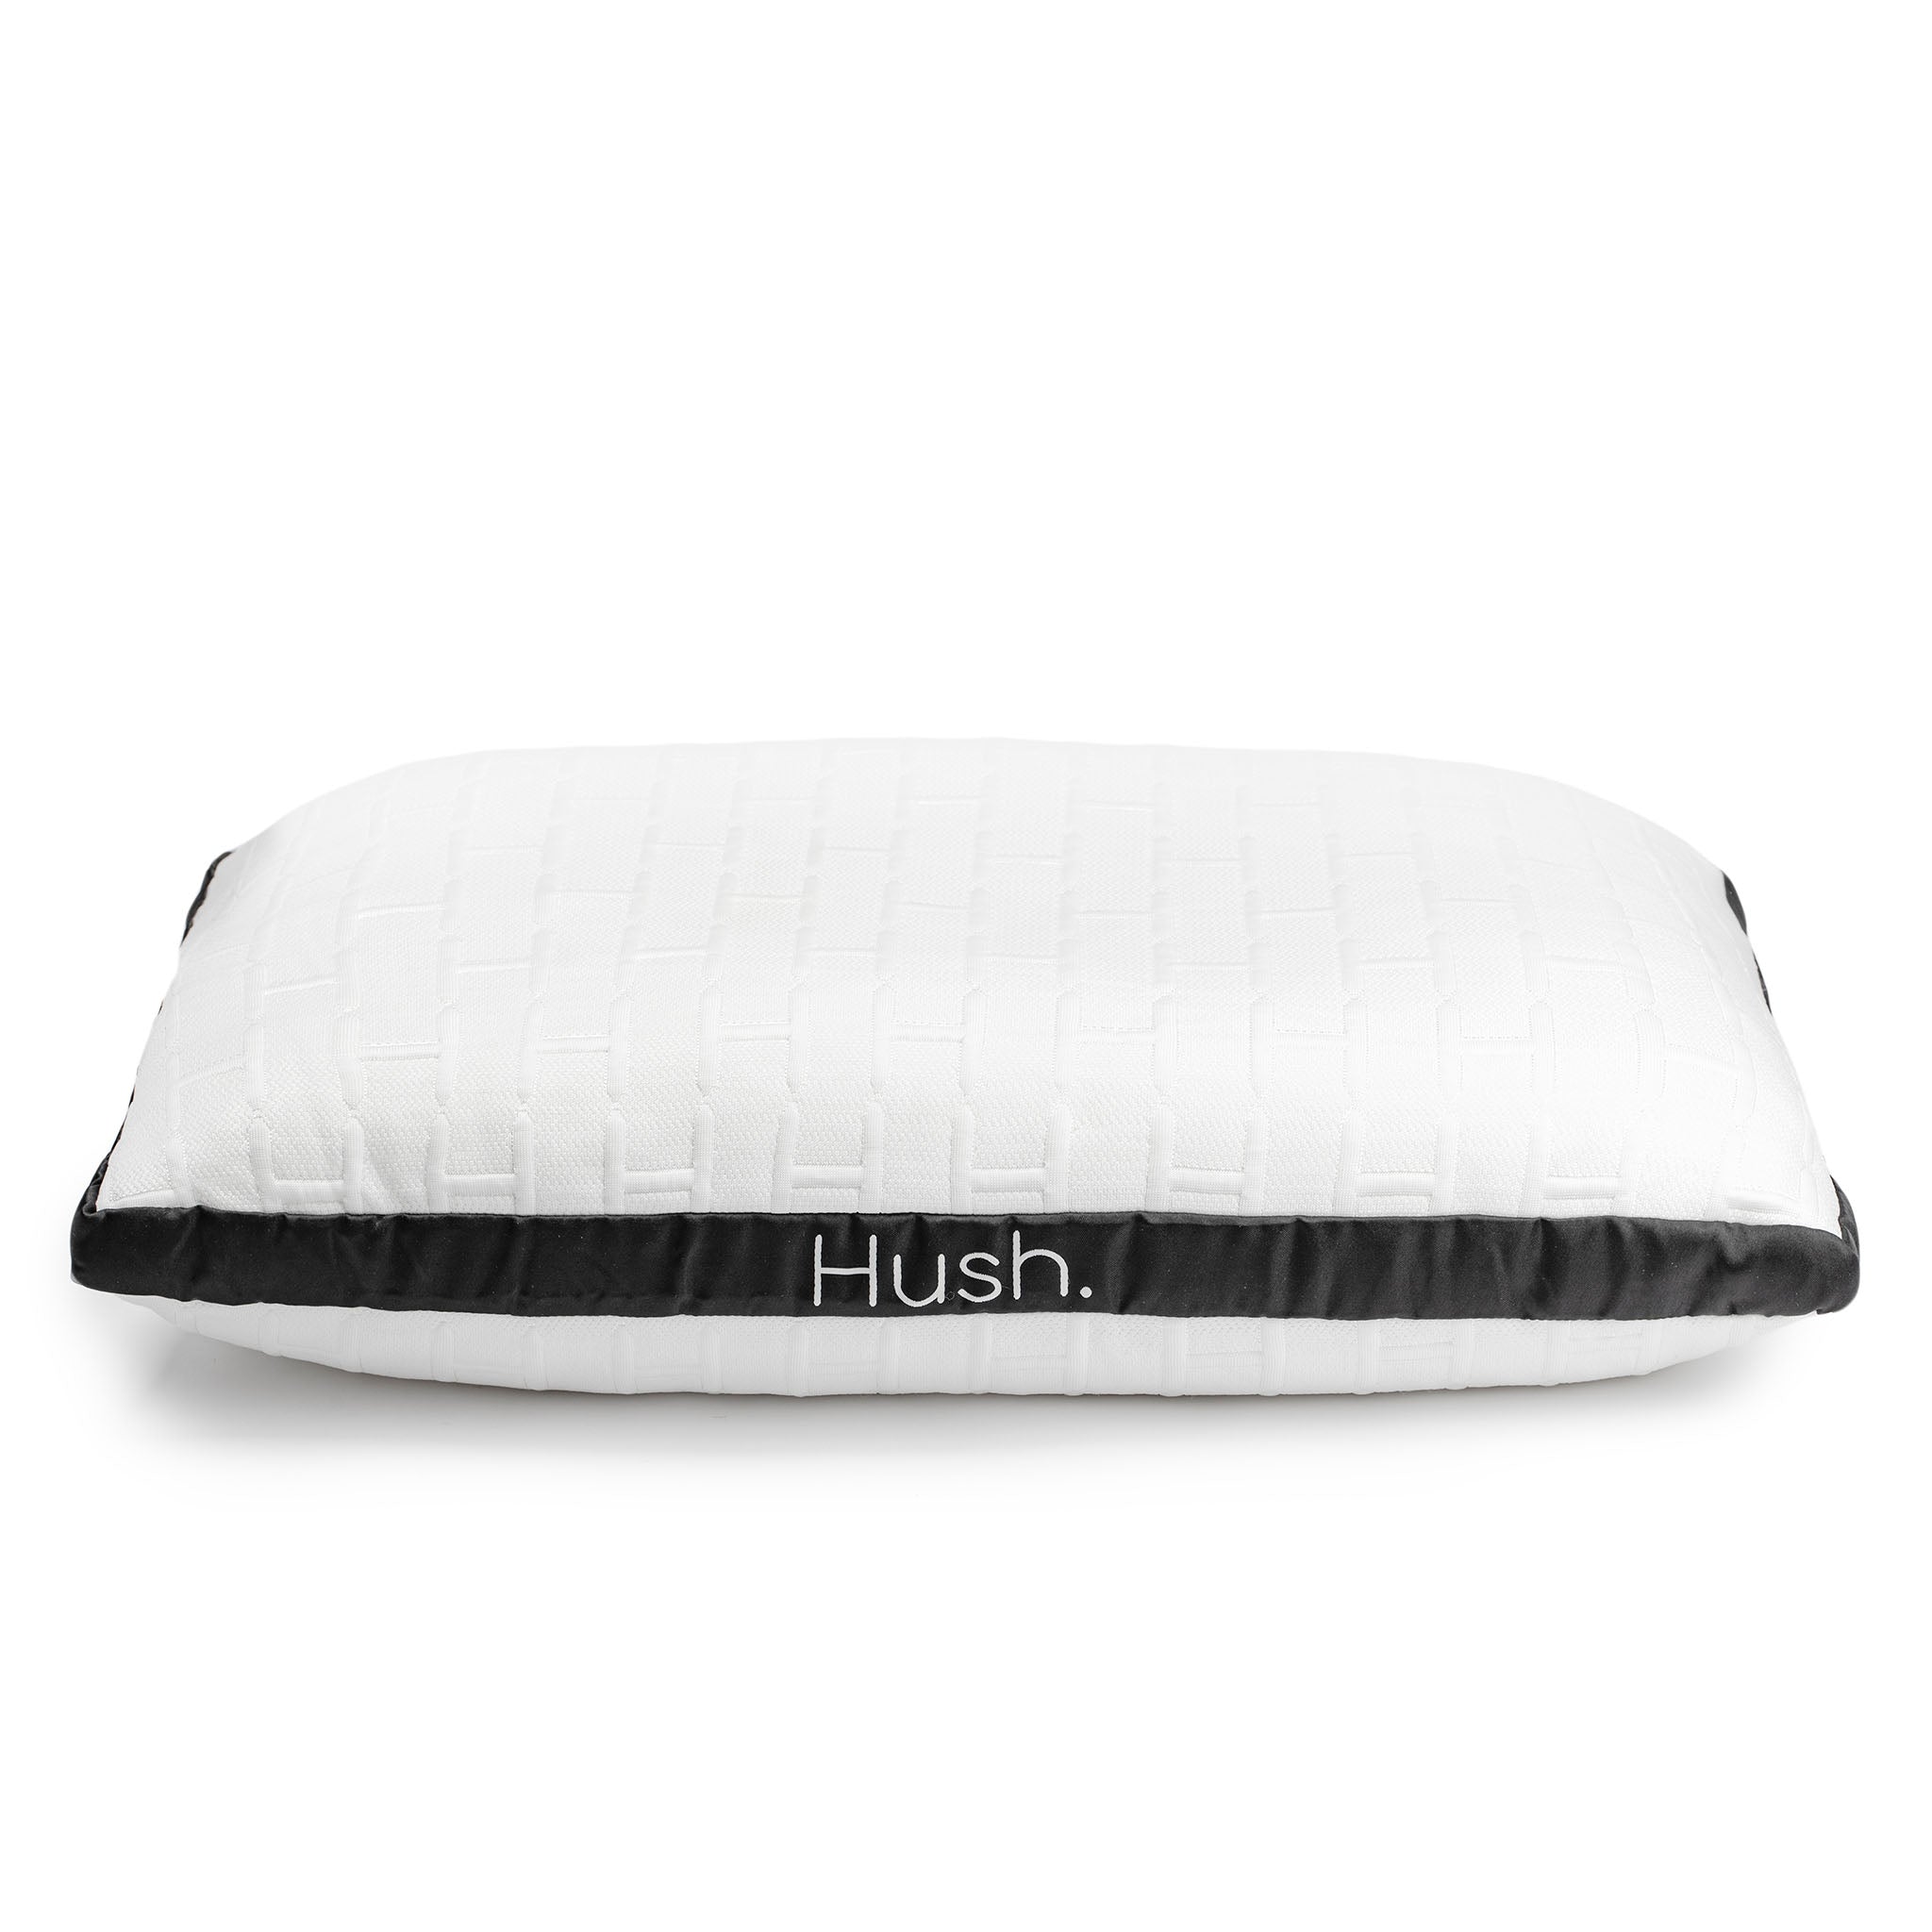 The　Adjustable　Hush　Foam　Memory　Hush　–　Blankets　Pillow　Pillow